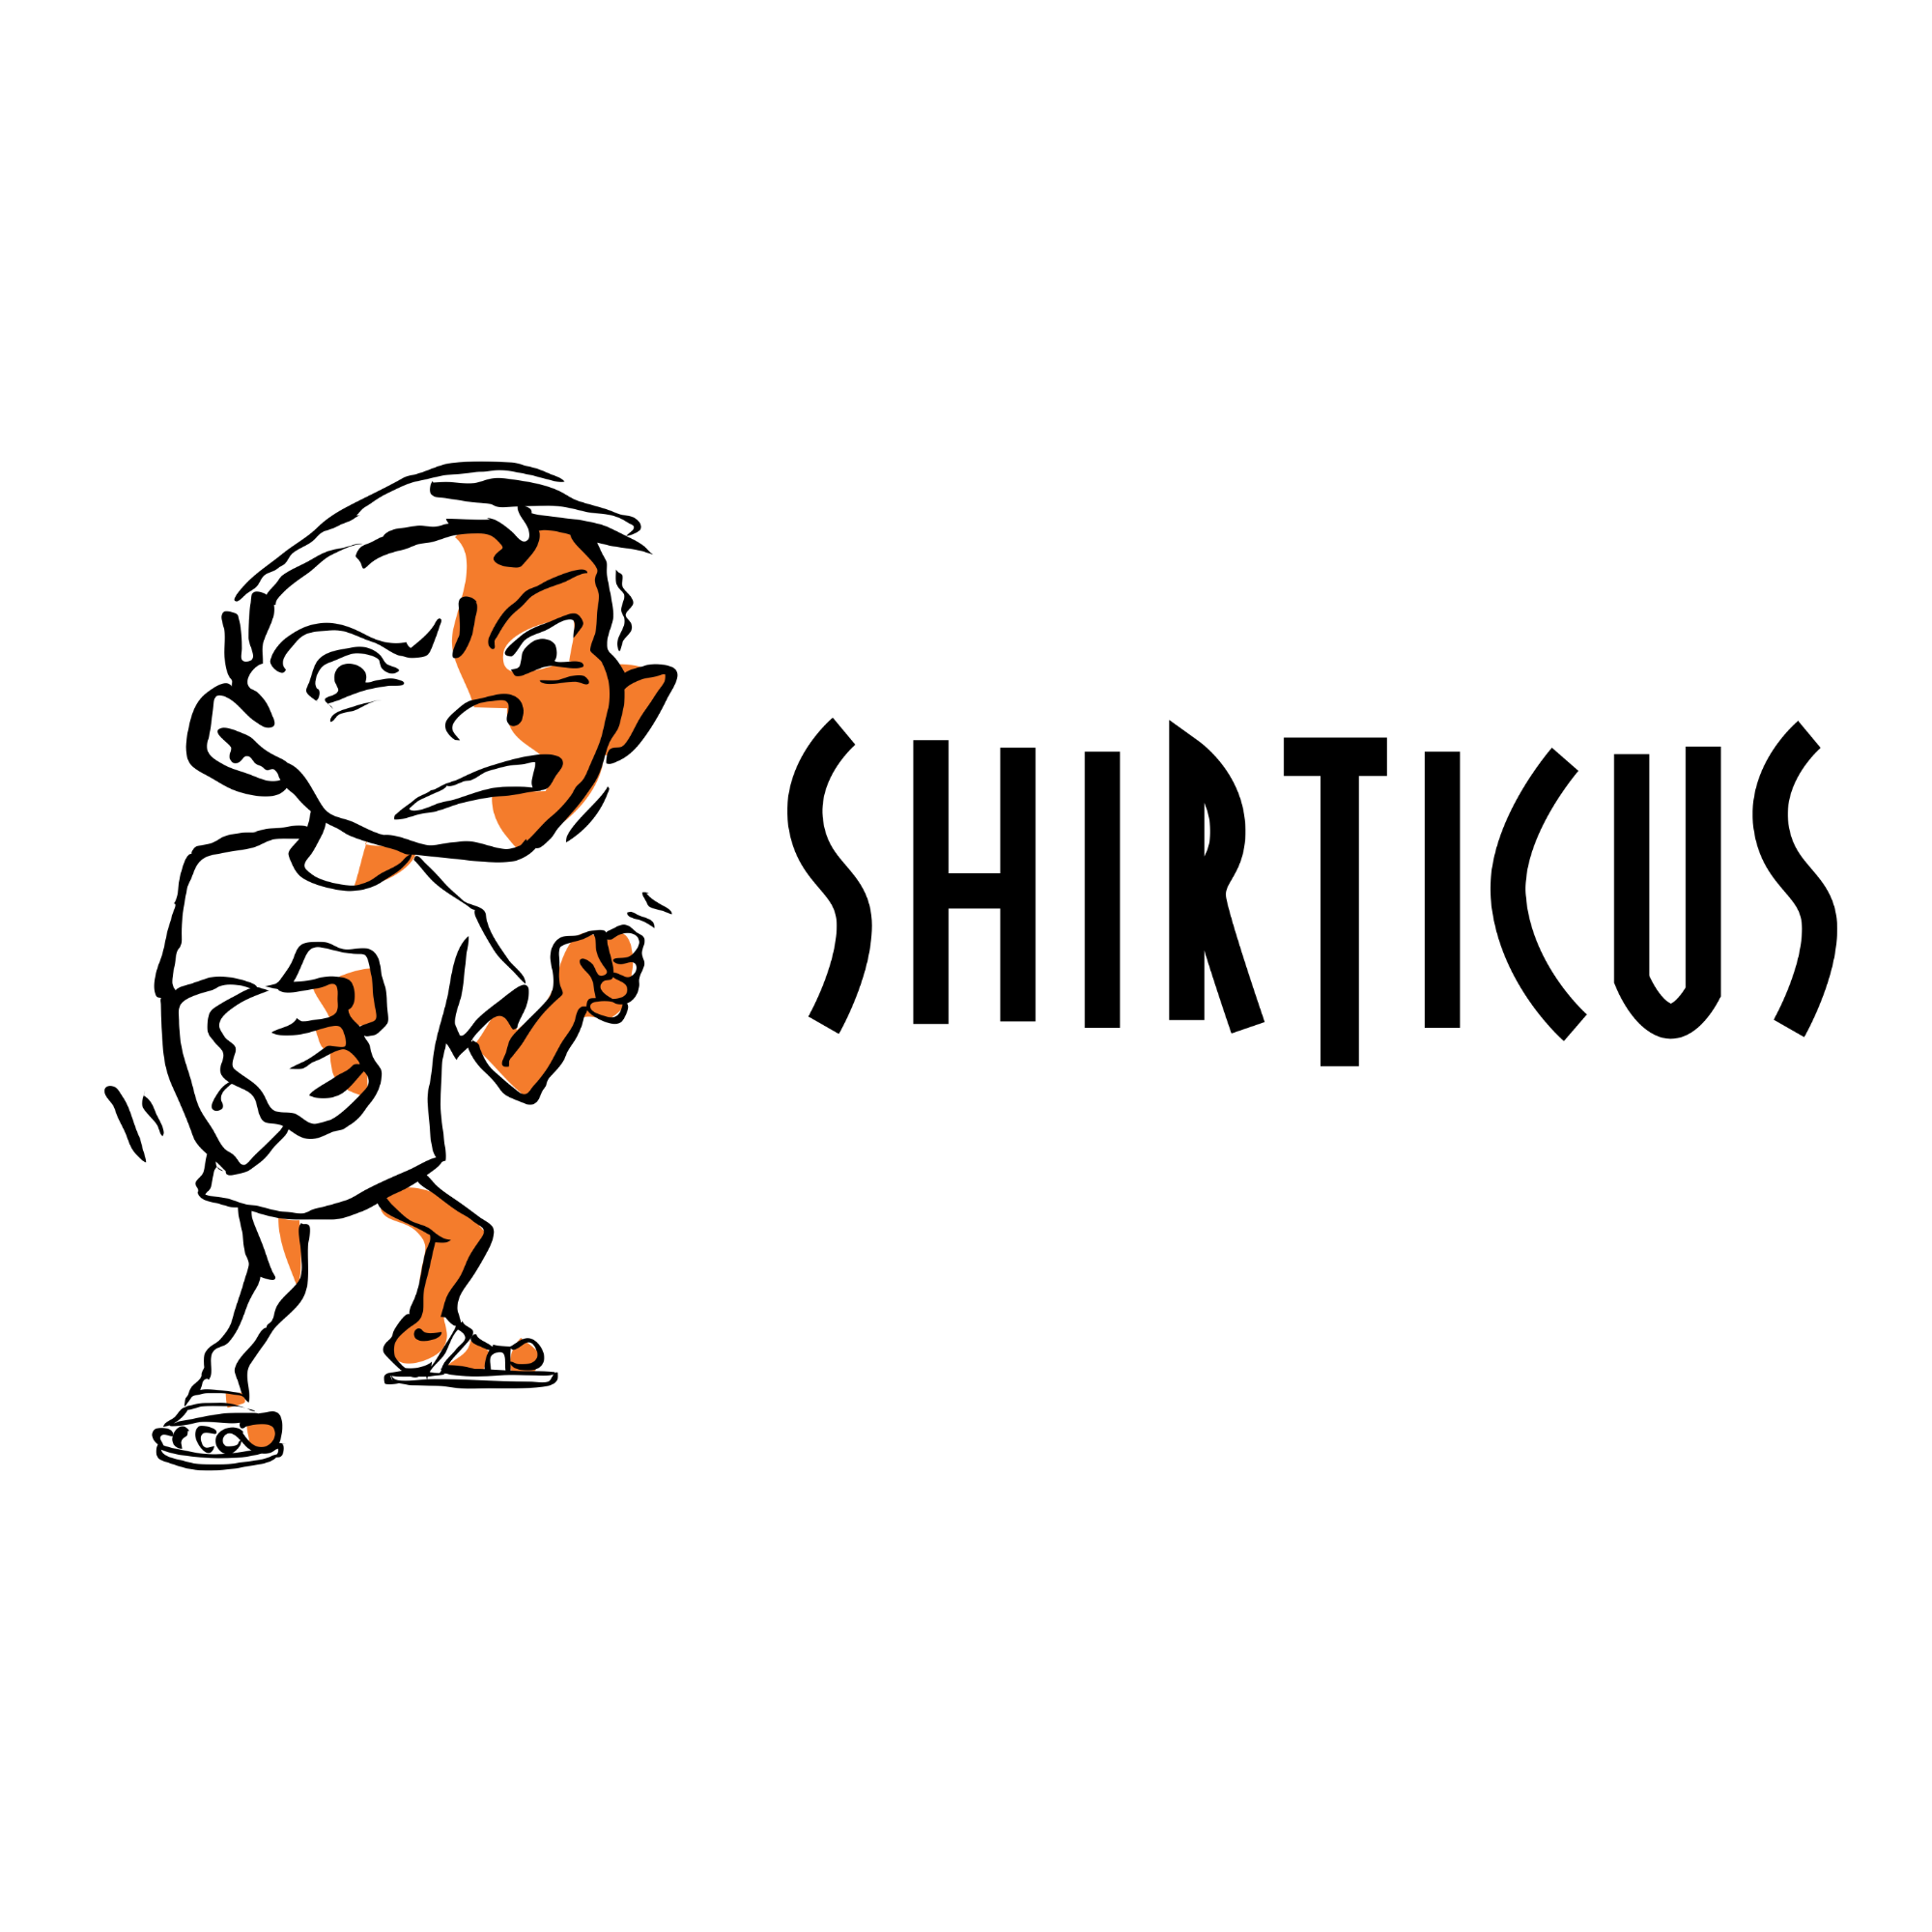 Shirticus